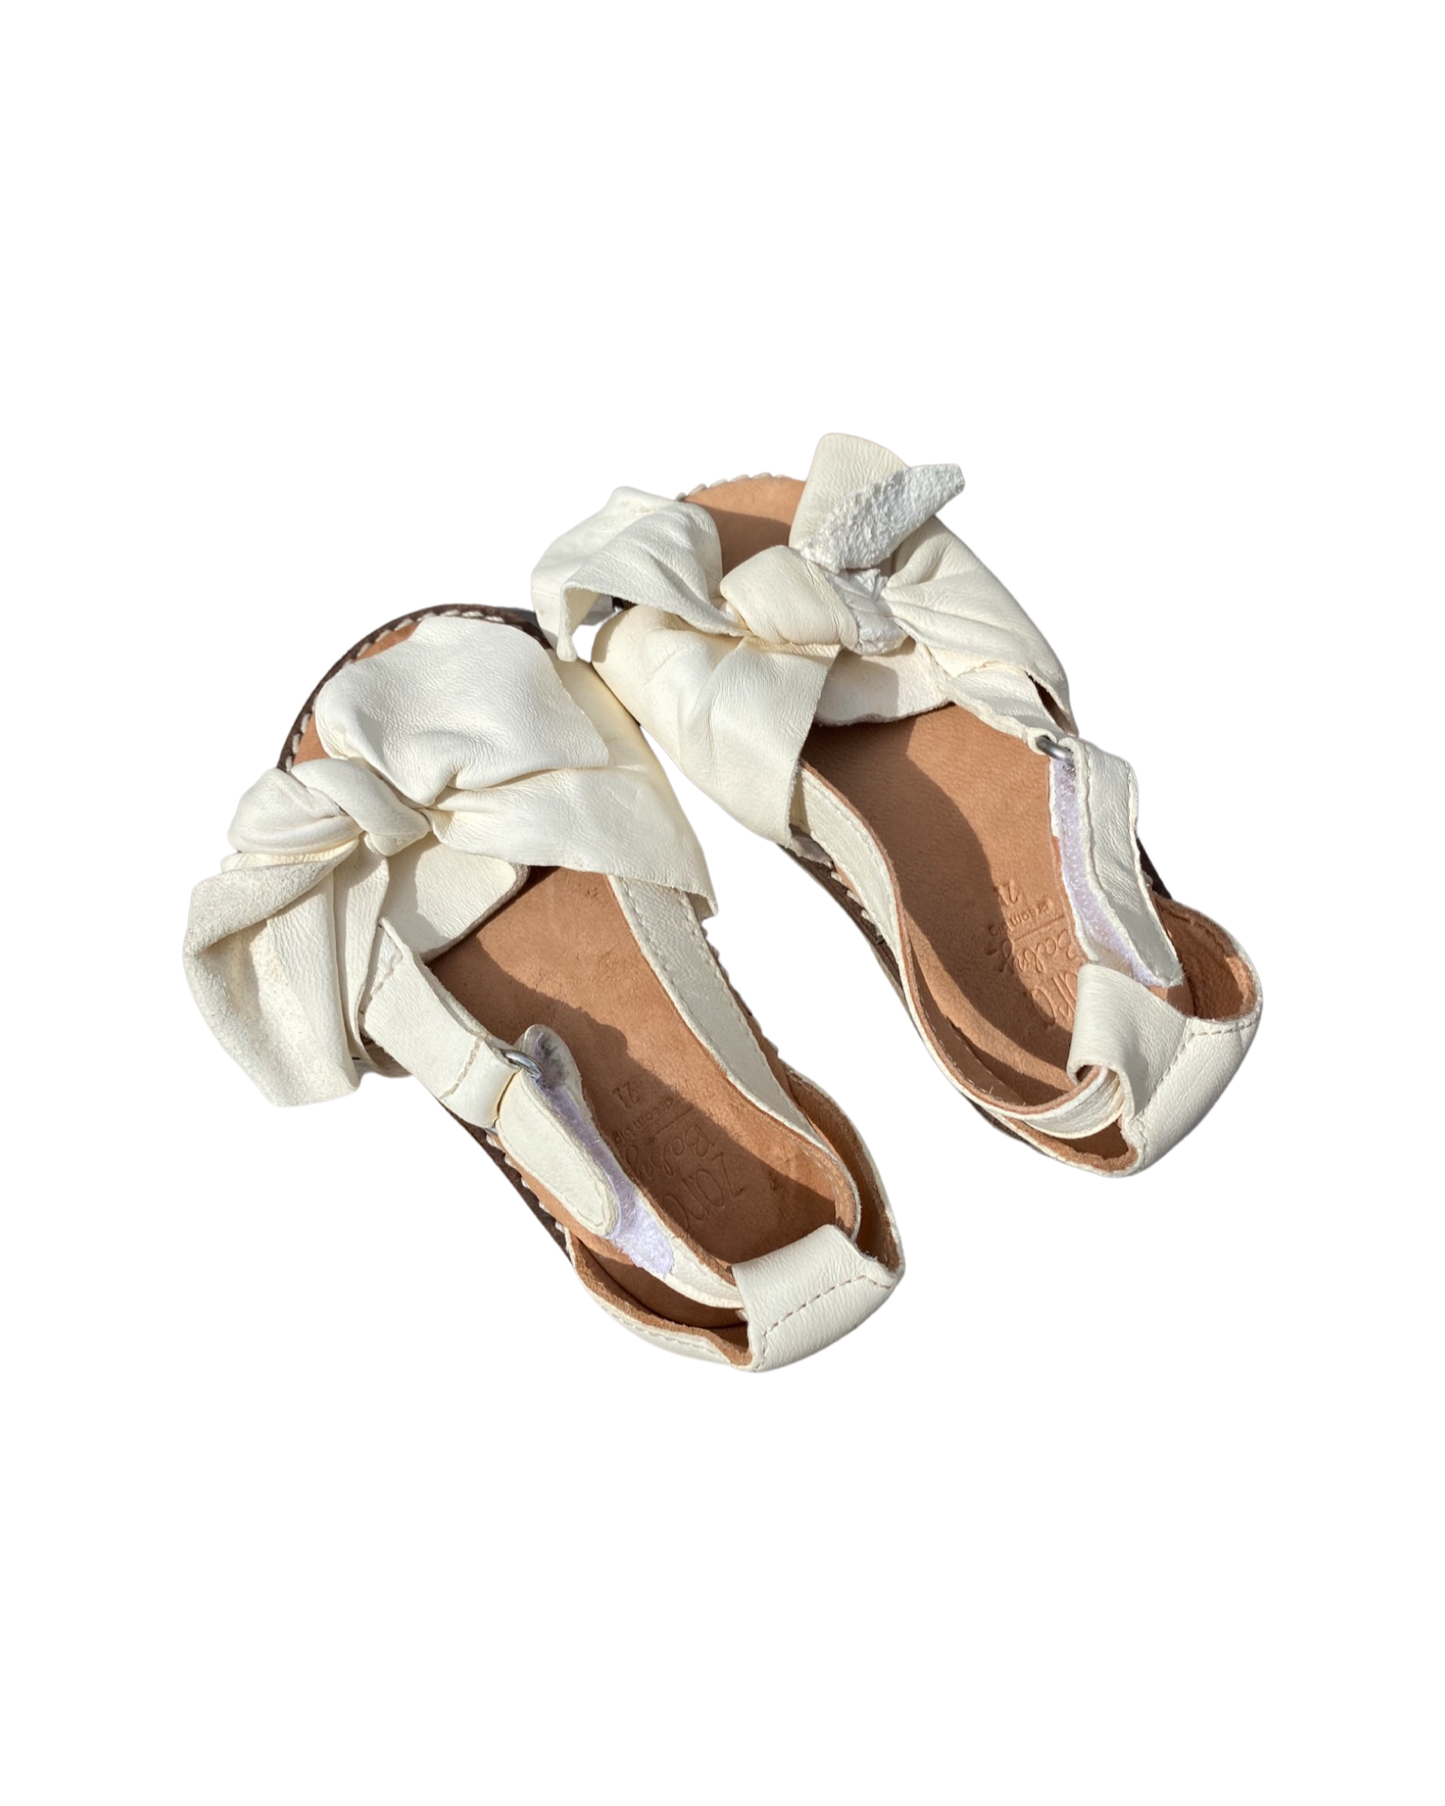 Zara white leather bow sandals (size EU21/UK4.5)